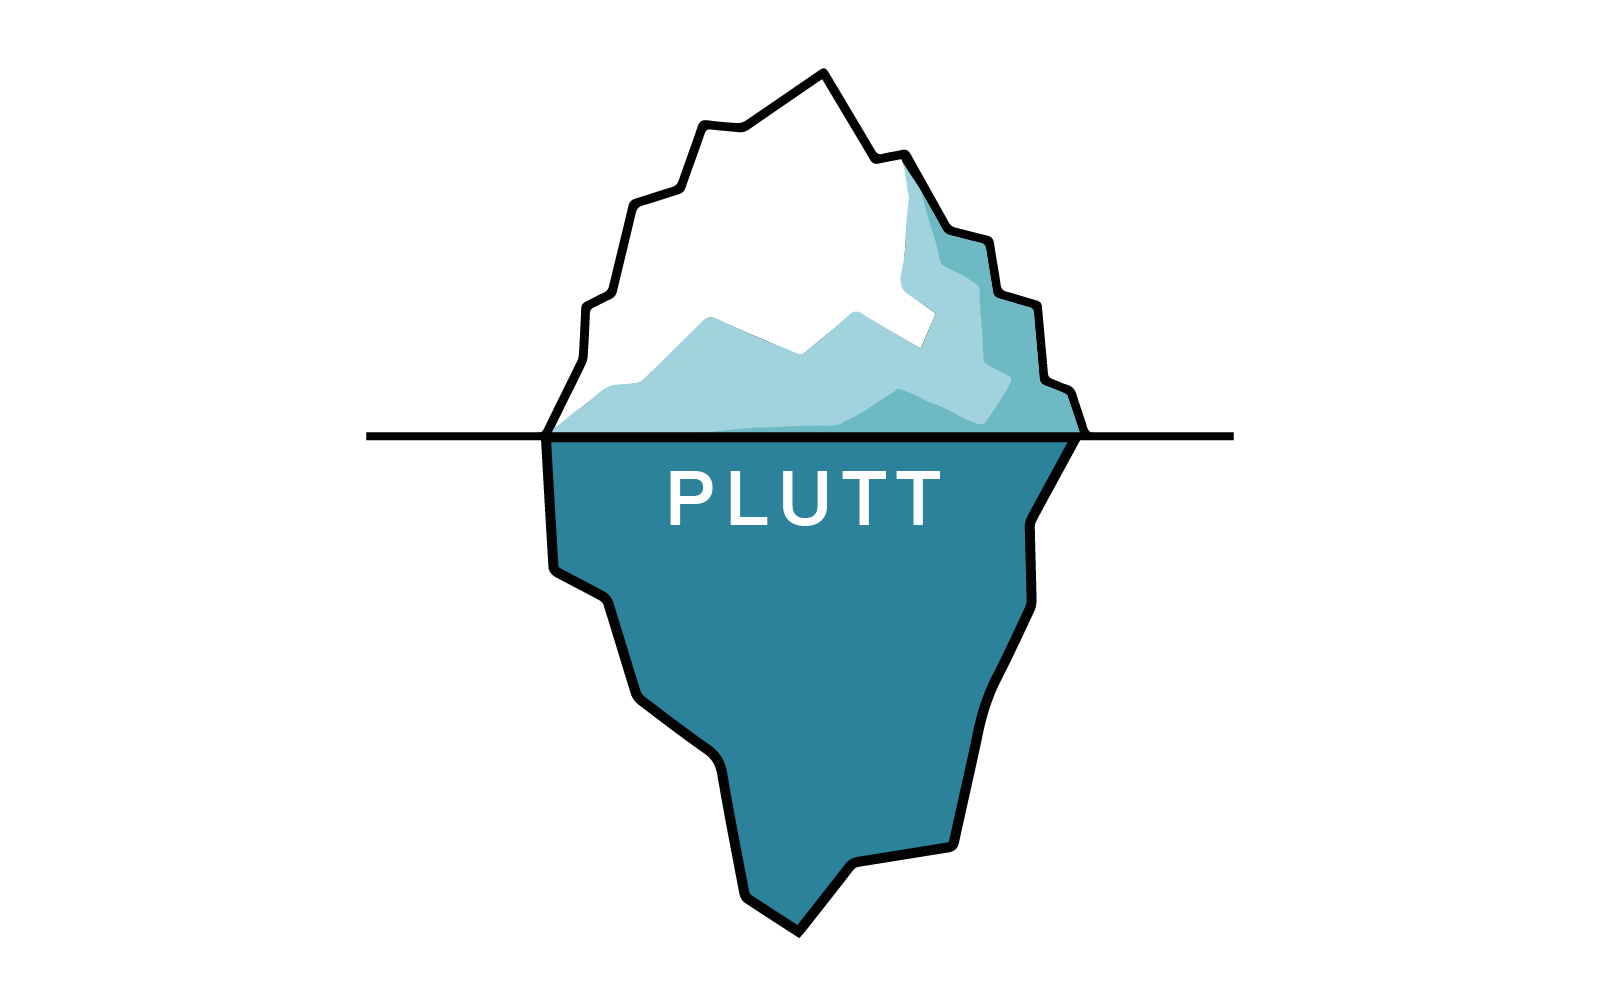 Plutt logo